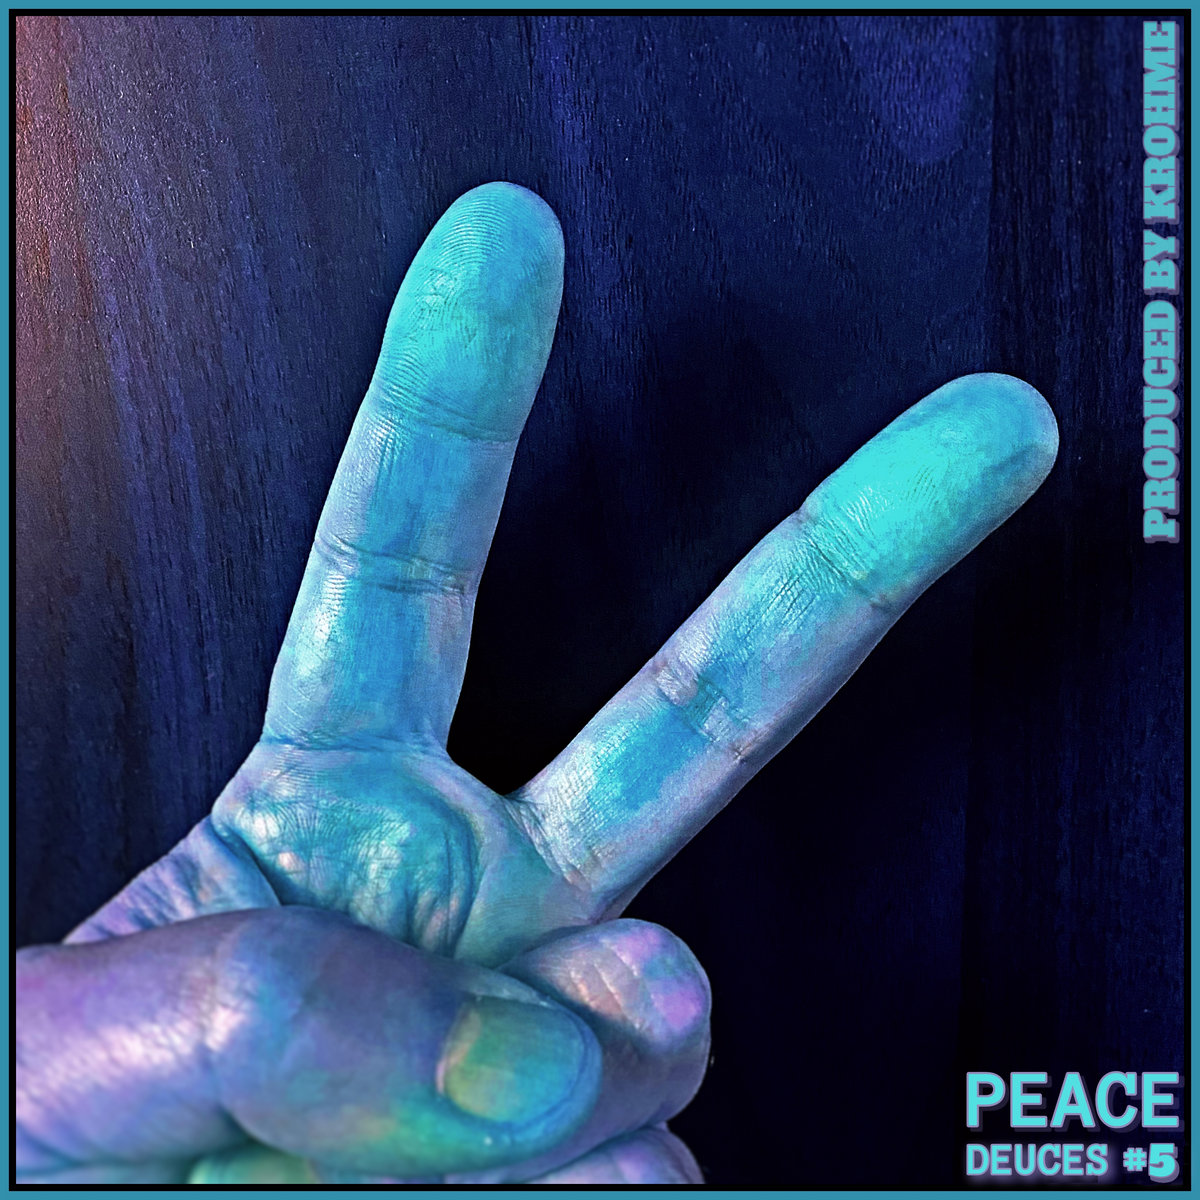 Sko Peace Deuces Reviews Album Of The Year